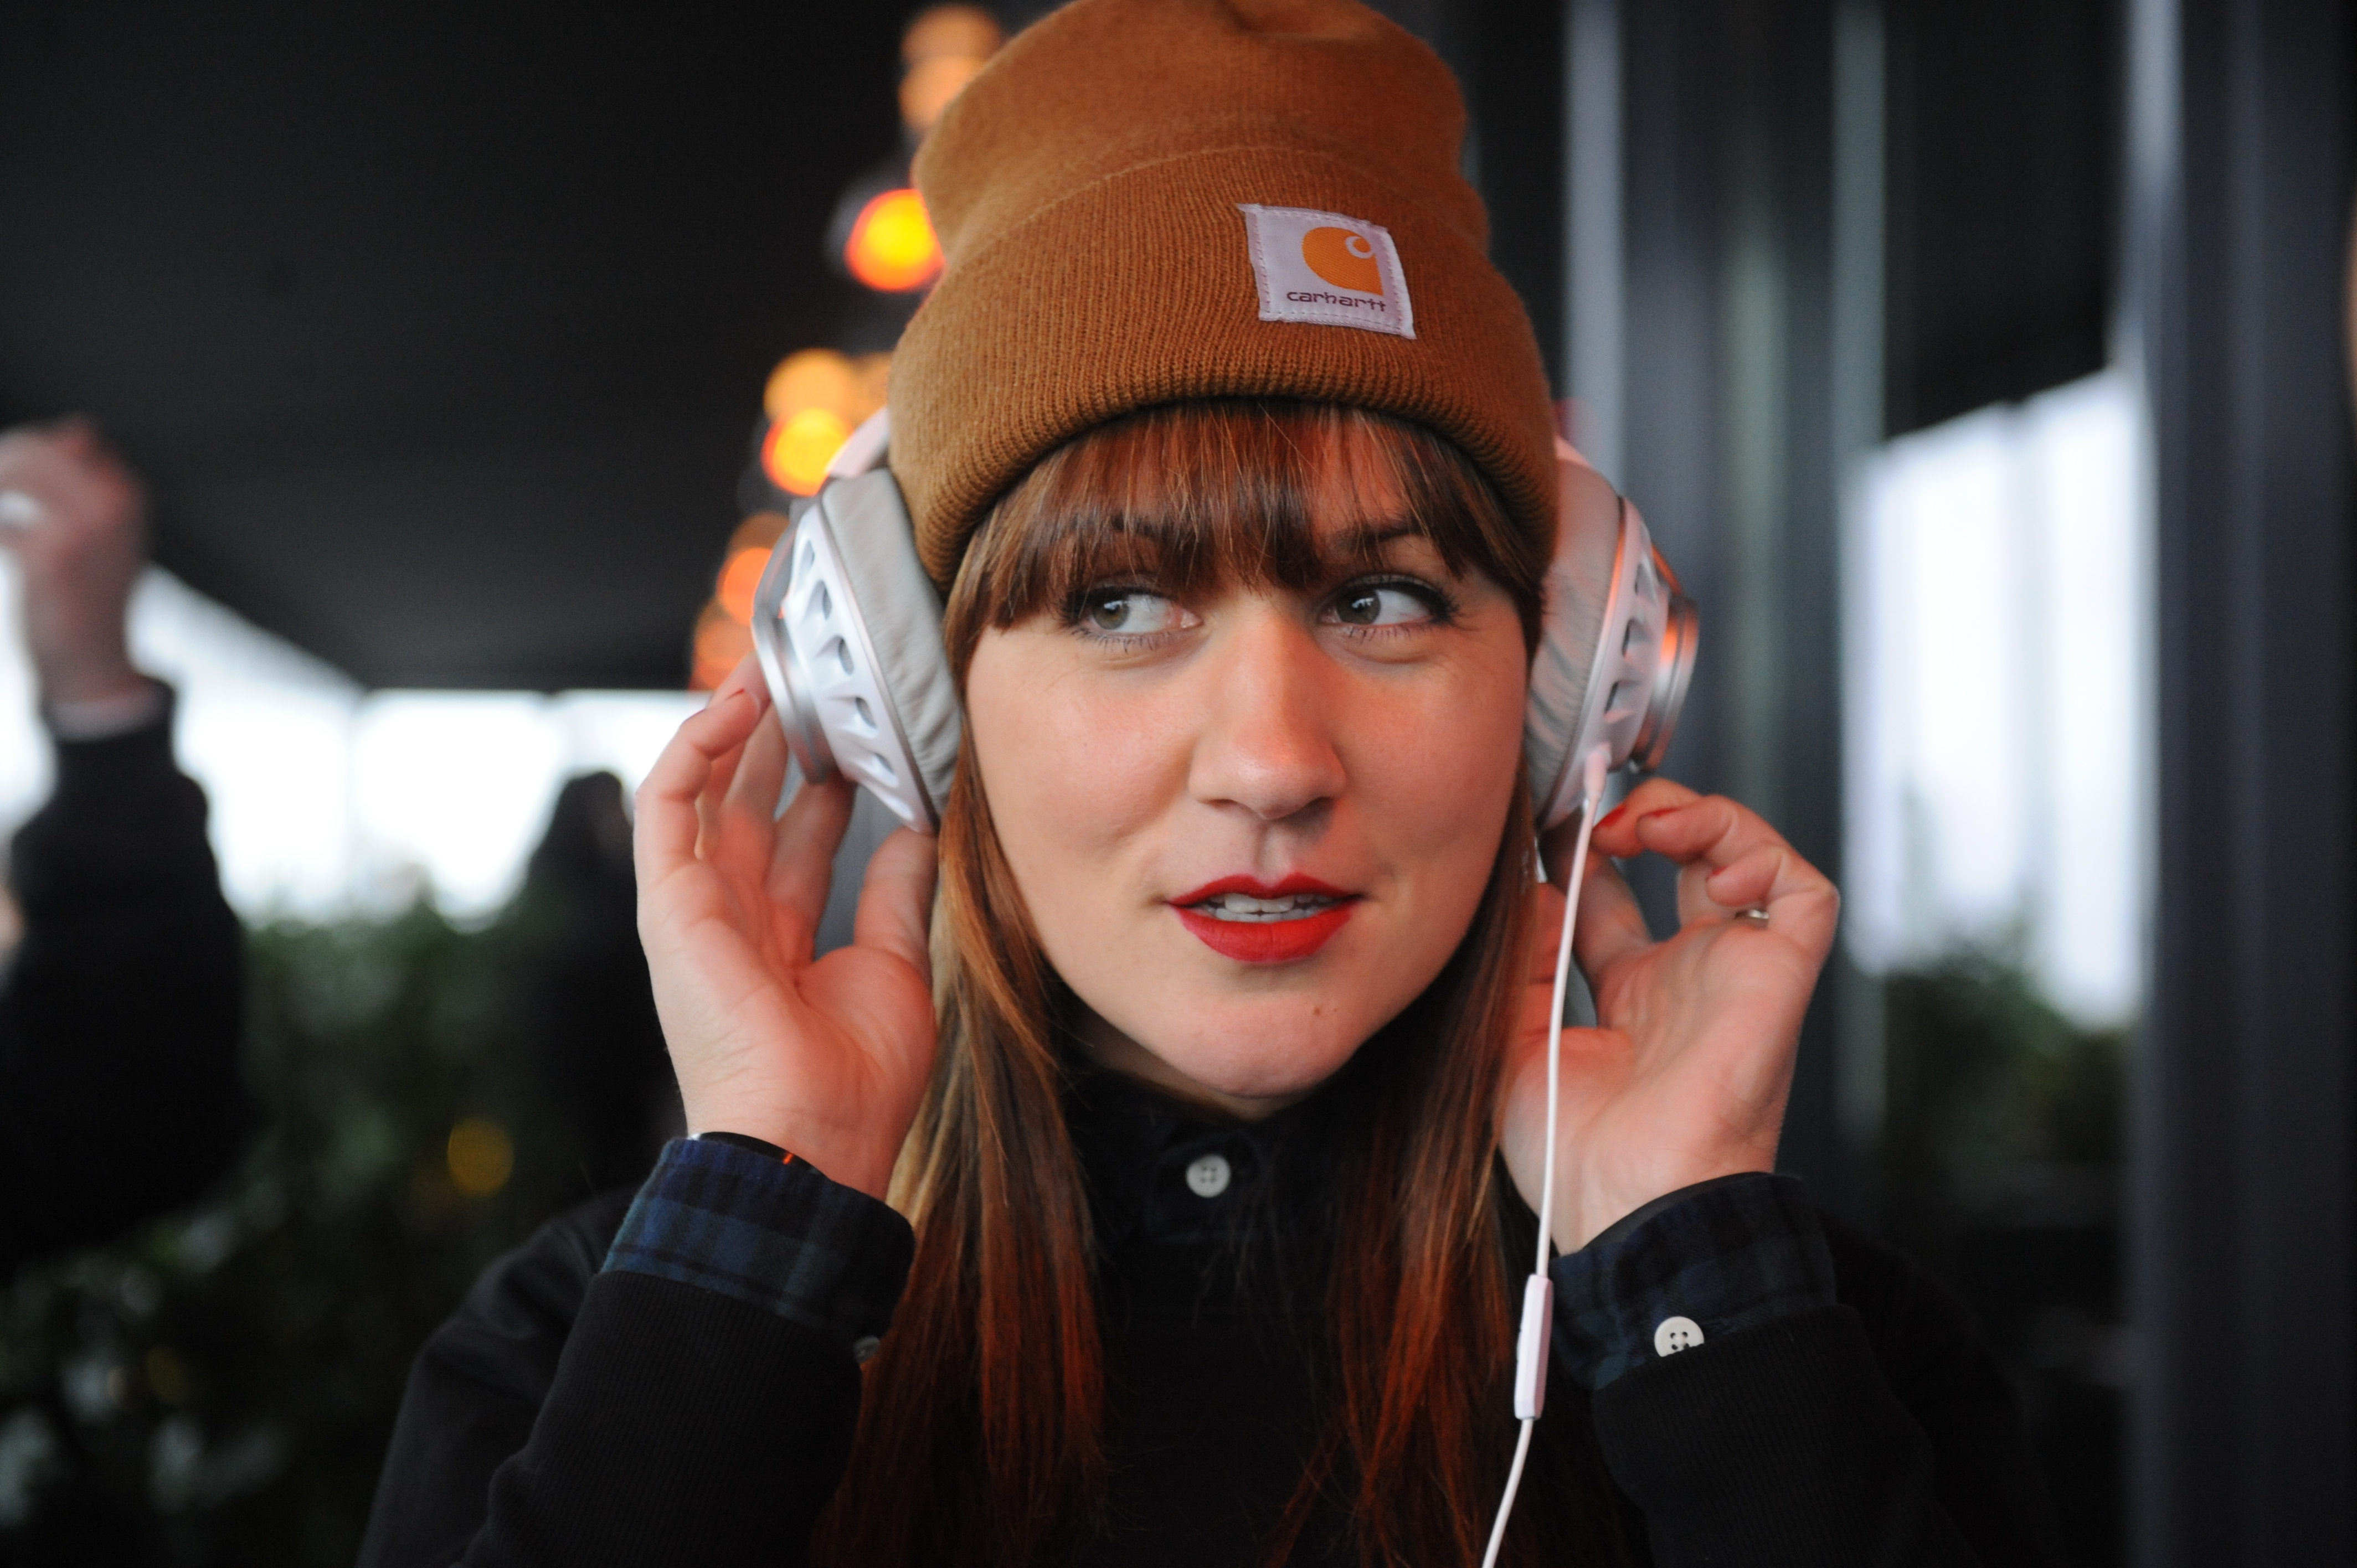 JBL 'Dare to Listen' Synchros S700 Headphone New York City Launch With DJ D-Nice